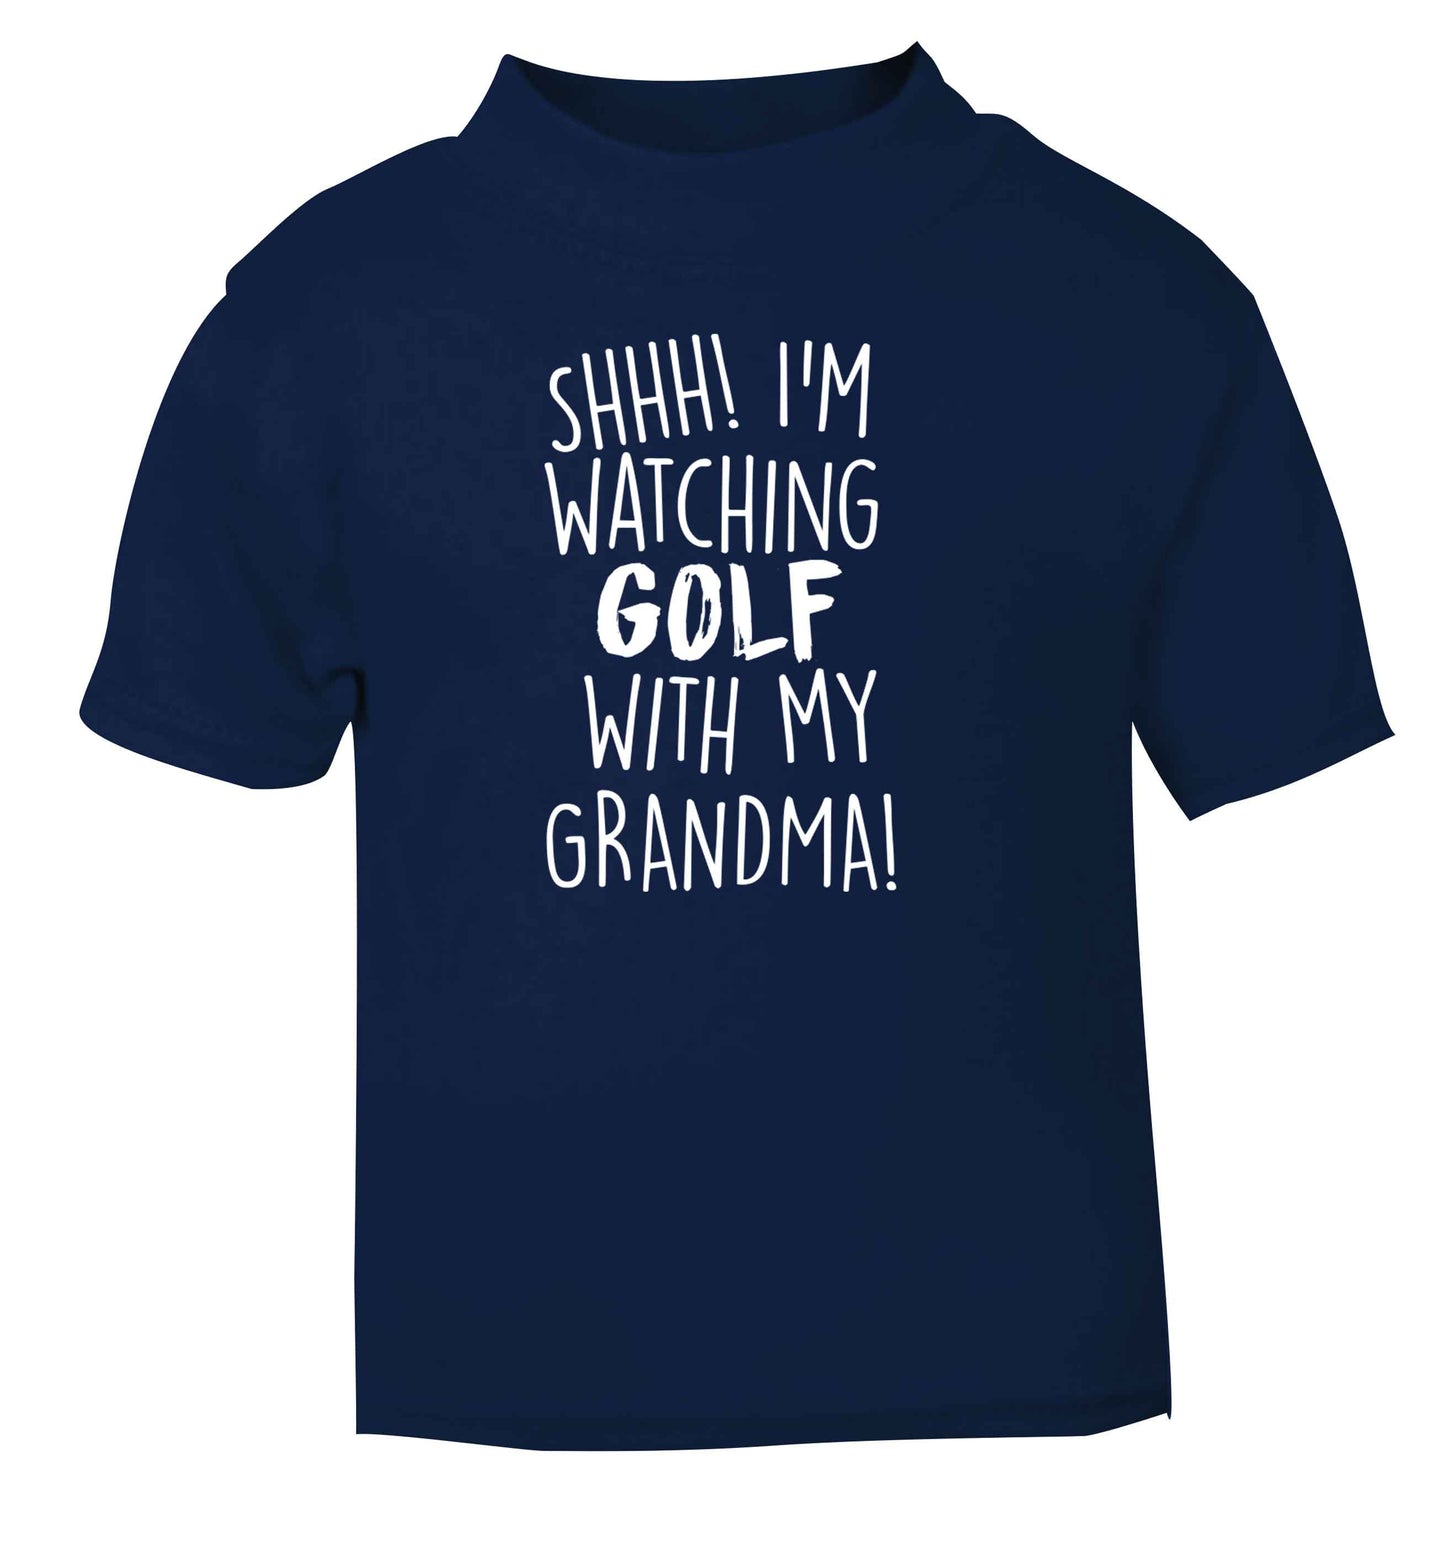 Shh I'm watching golf with my grandma navy Baby Toddler Tshirt 2 Years